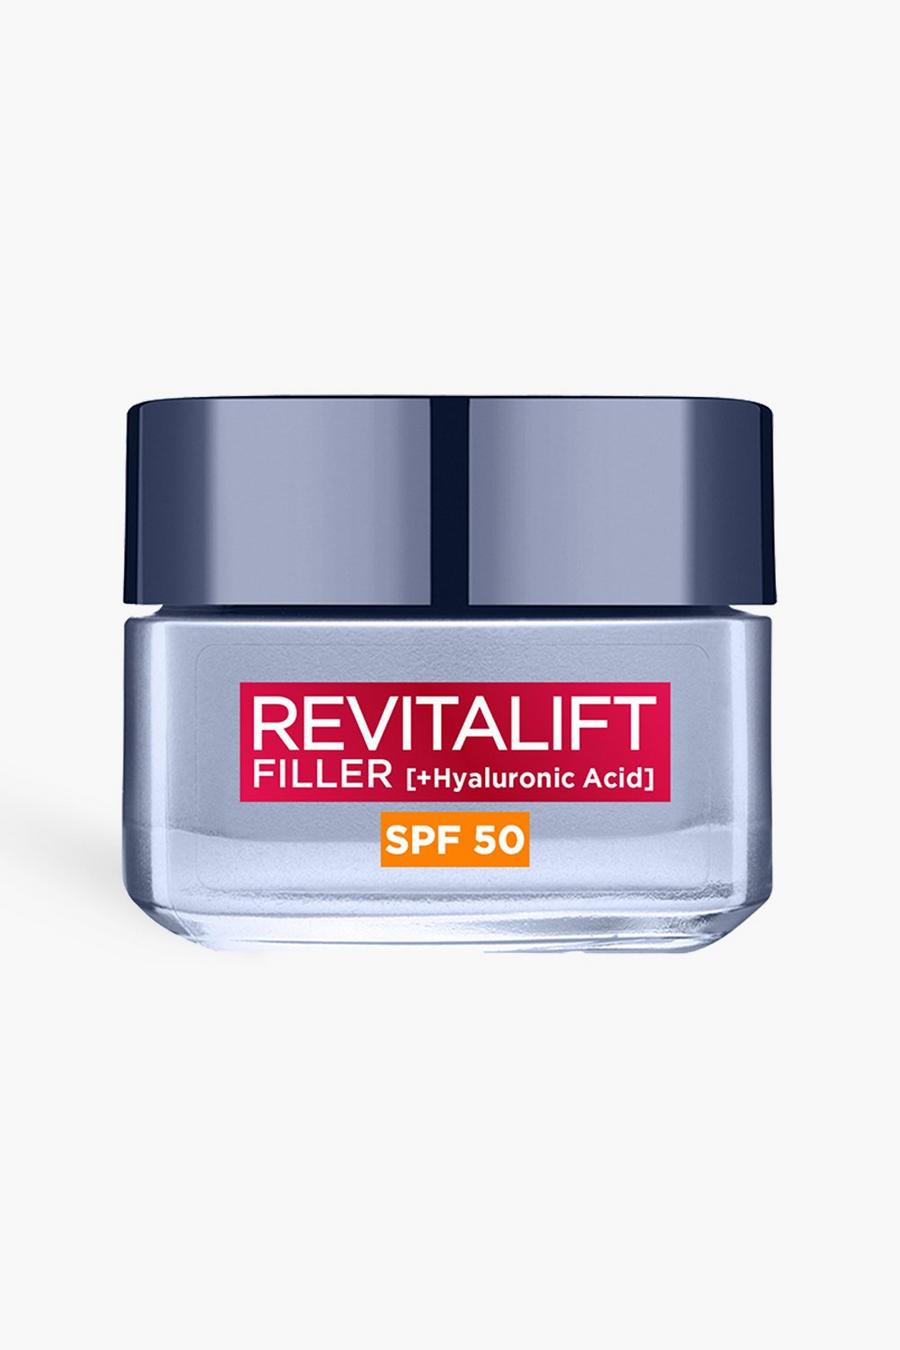 Purple violett L'Oréal Paris Revitalift Filler Replumping Anti-Ageing Hyaluronic Acid Cream With SPF 50, 50ml